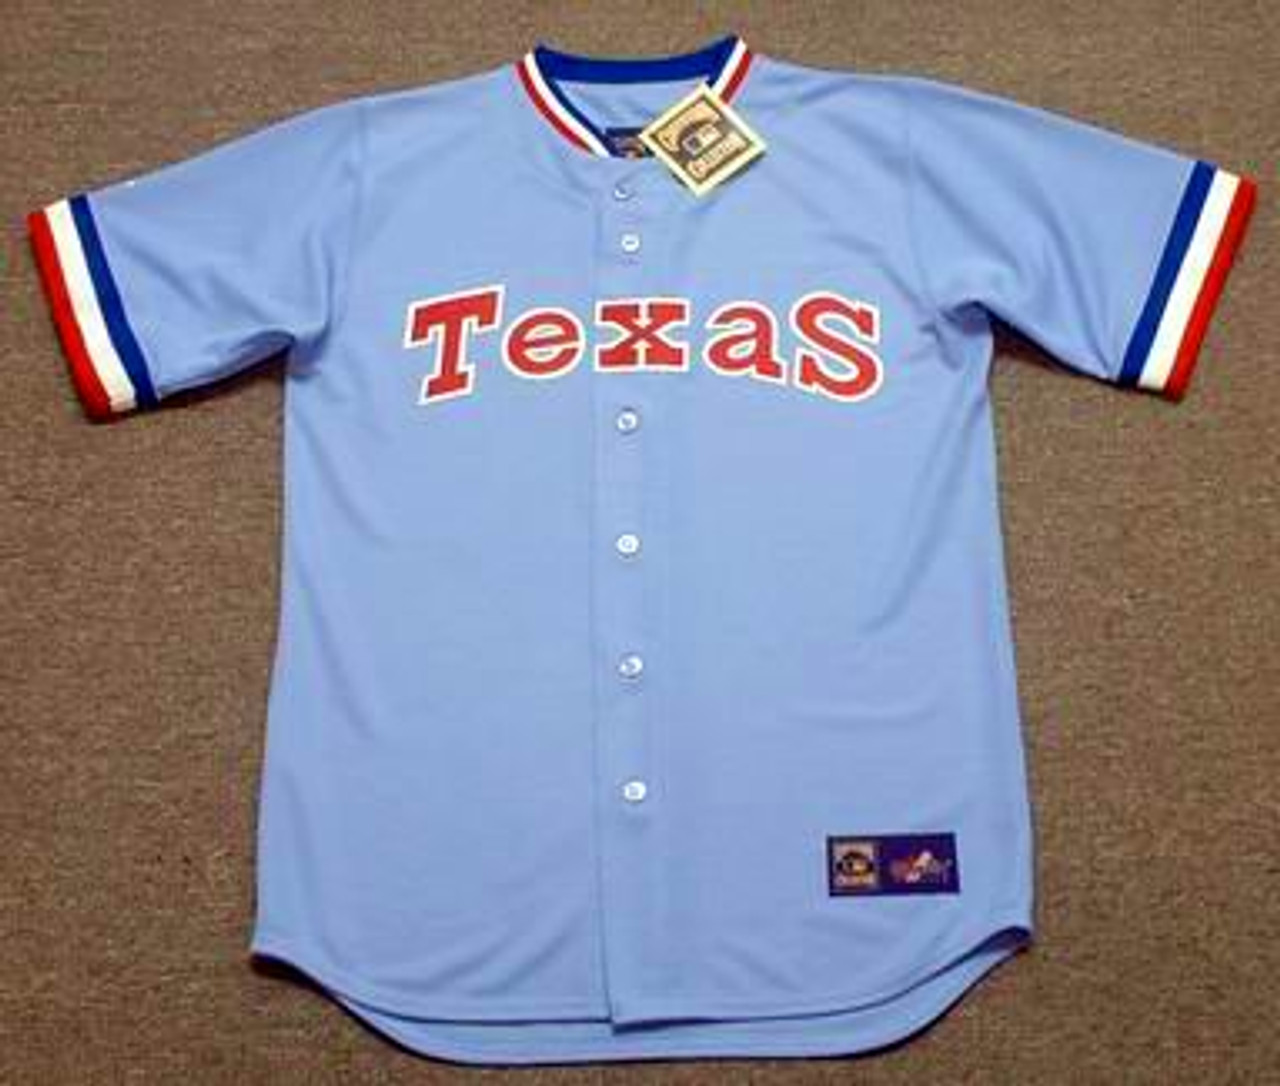 Al Oliver Jersey - Texas Rangers 1981 Vintage Throwback MLB Baseball Jersey